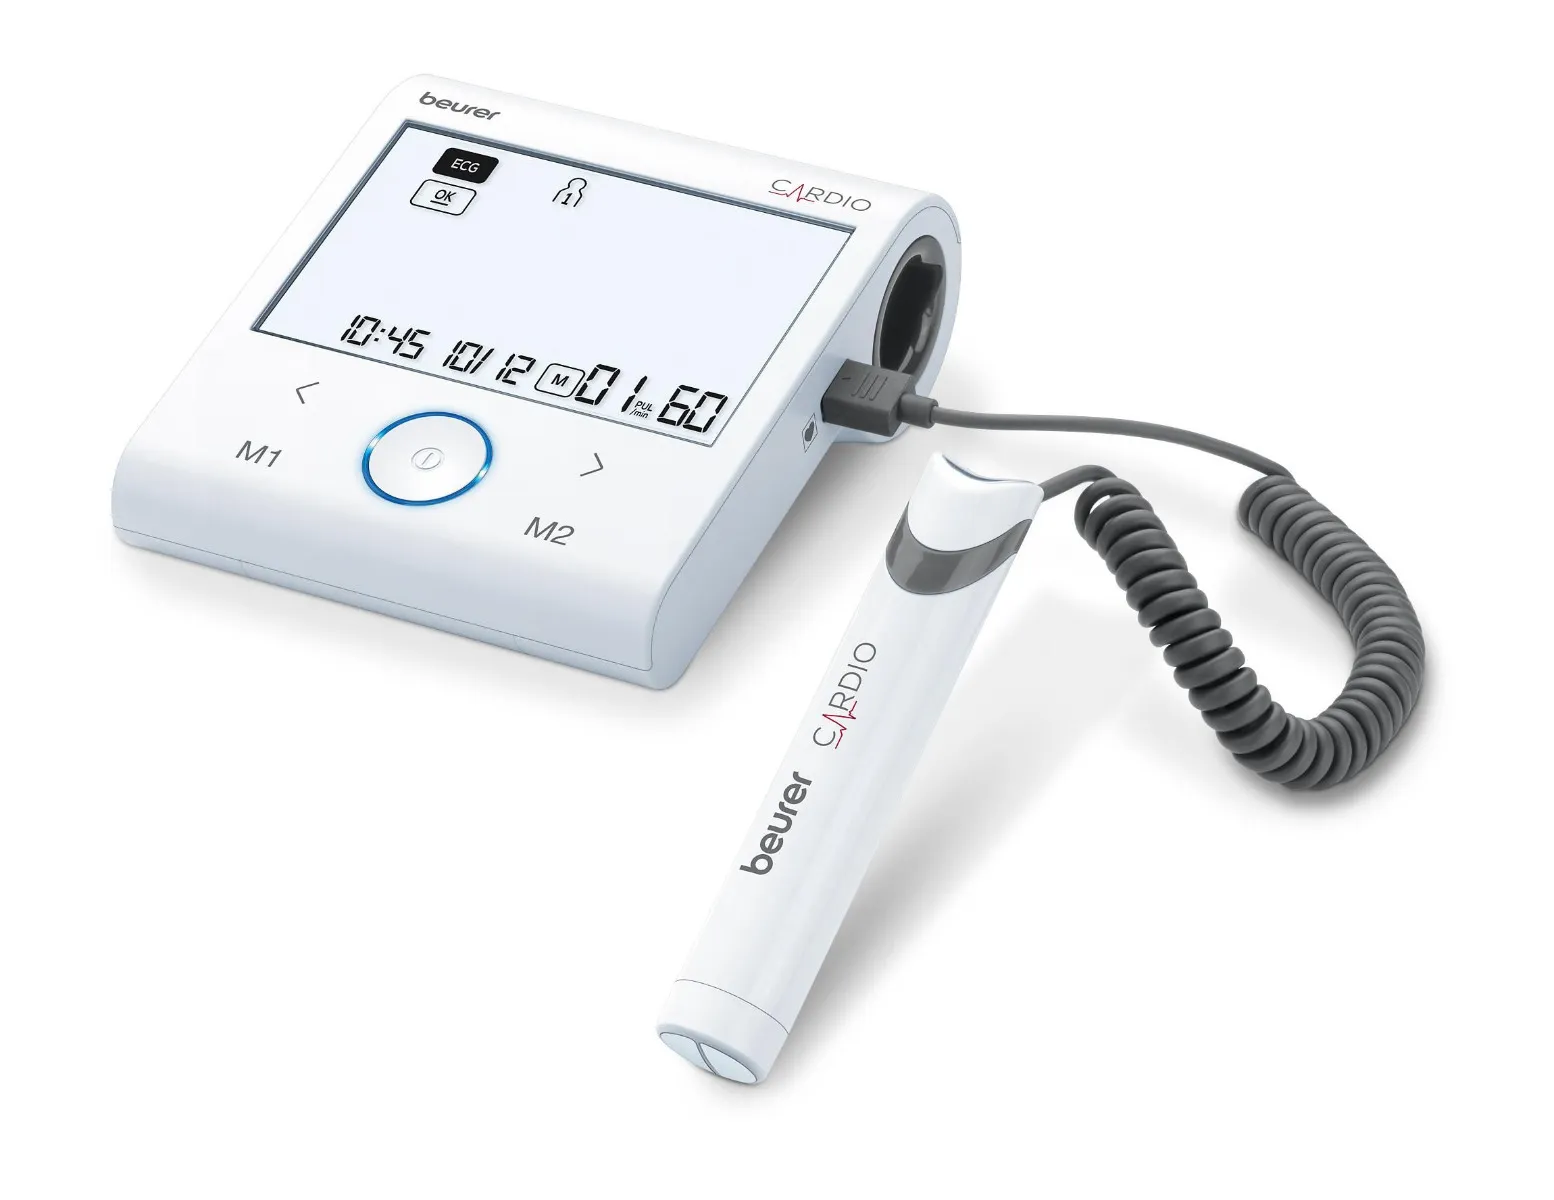 Beurer BM 96 Cardio Měřič krevního tlaku s EKG 